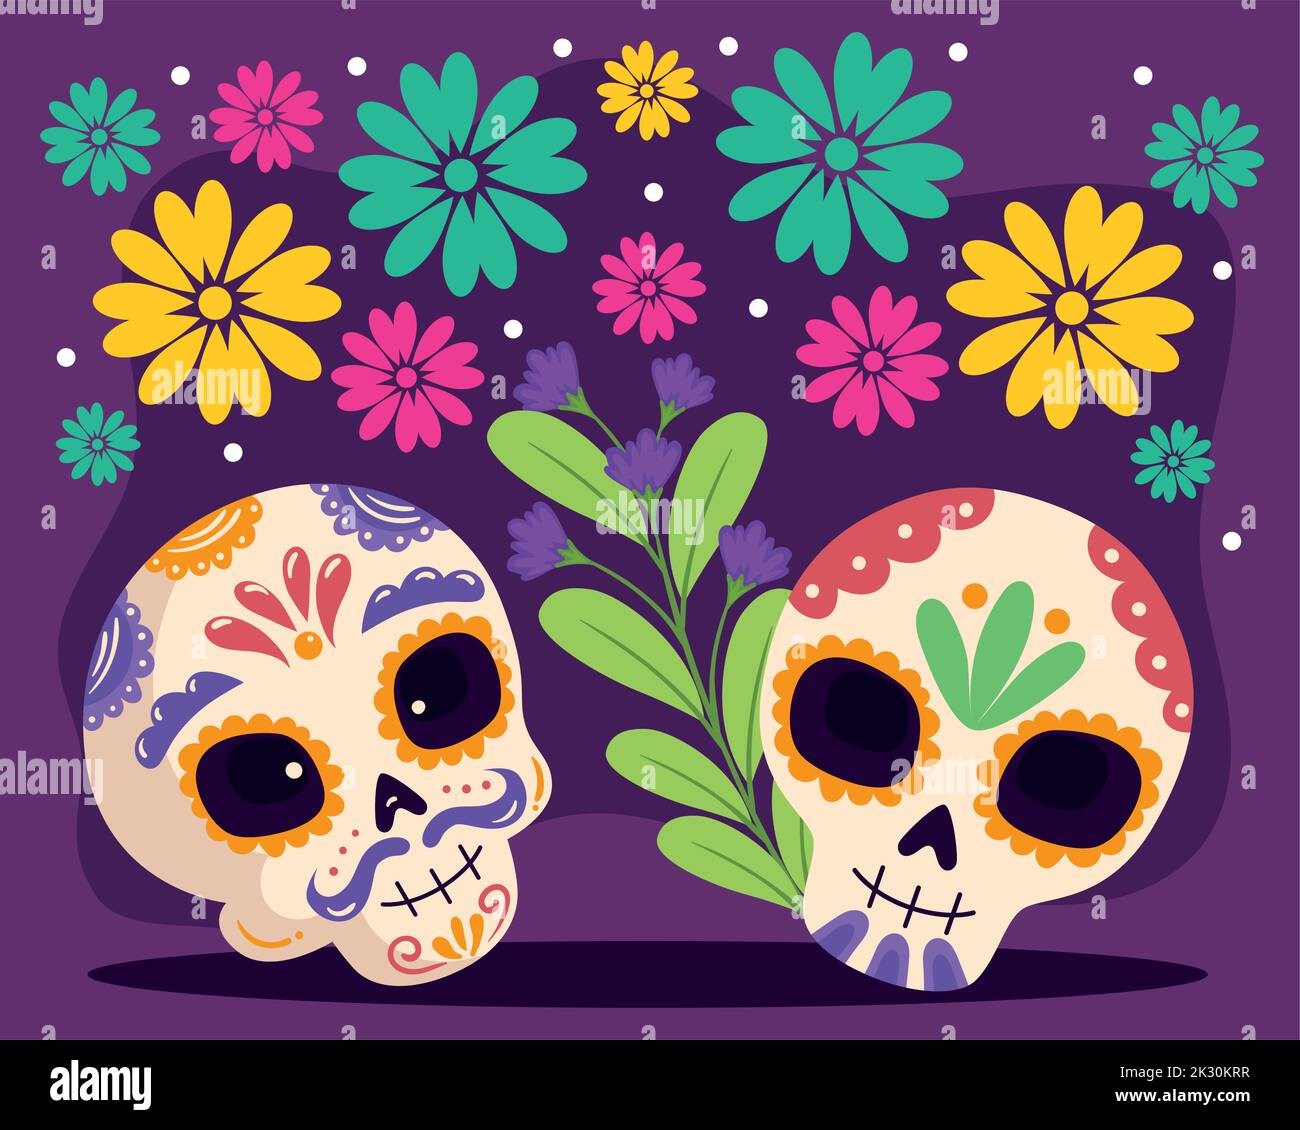 dia de los muertos skulls with floral pattern poster Stock Vector